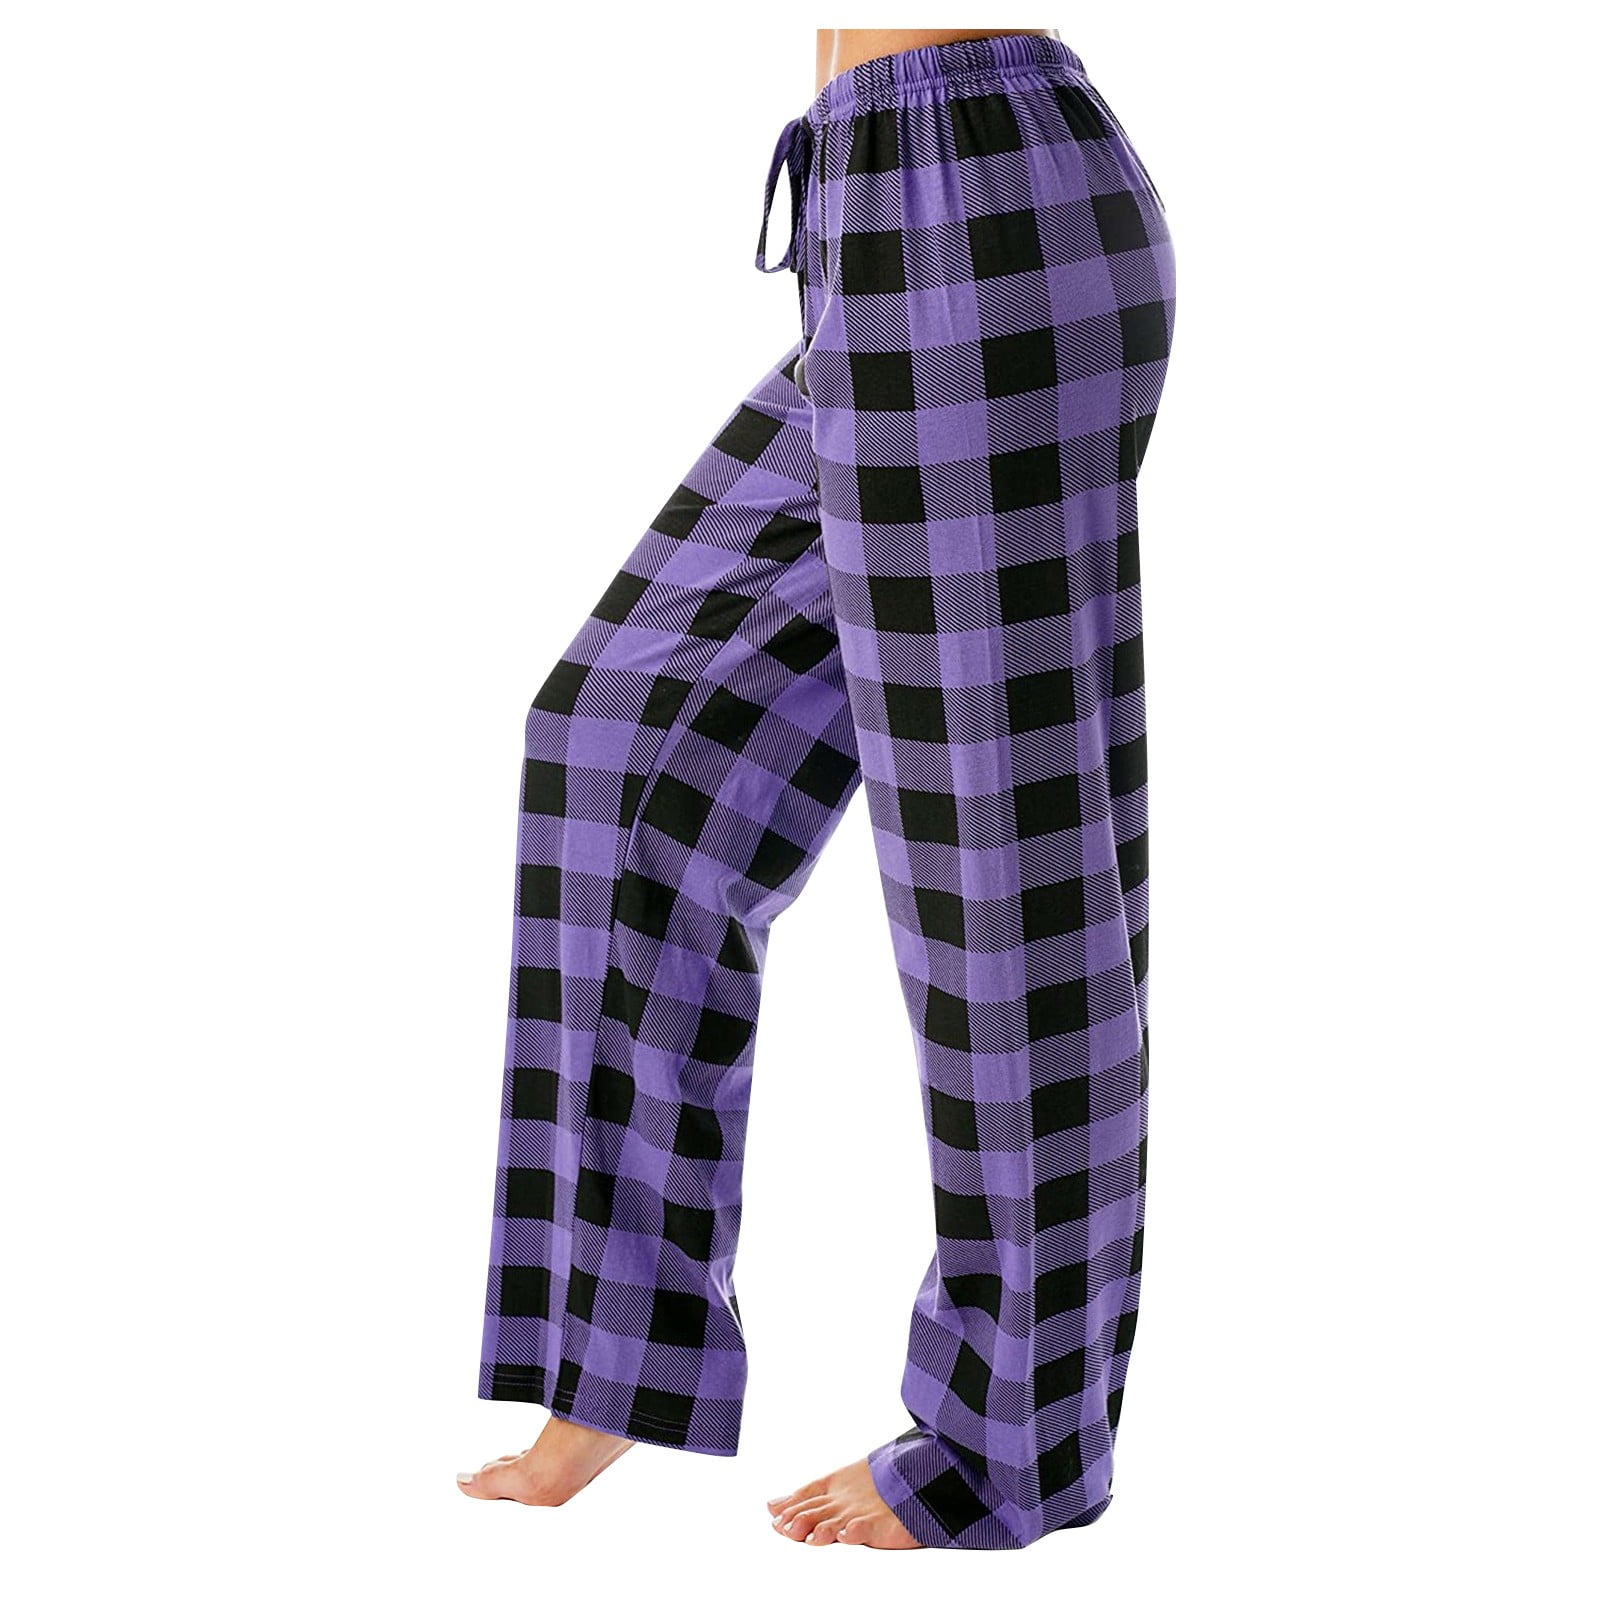 Qcmgmg Mens Buffalo Plaid Pajama Pants Comfy Casual Pj Bottoms Wide Leg  Lounge Pants Drawstring Soft Pj Pants Sleepwear Pajama Bottoms ( Red and  Black Plaid,M ) 